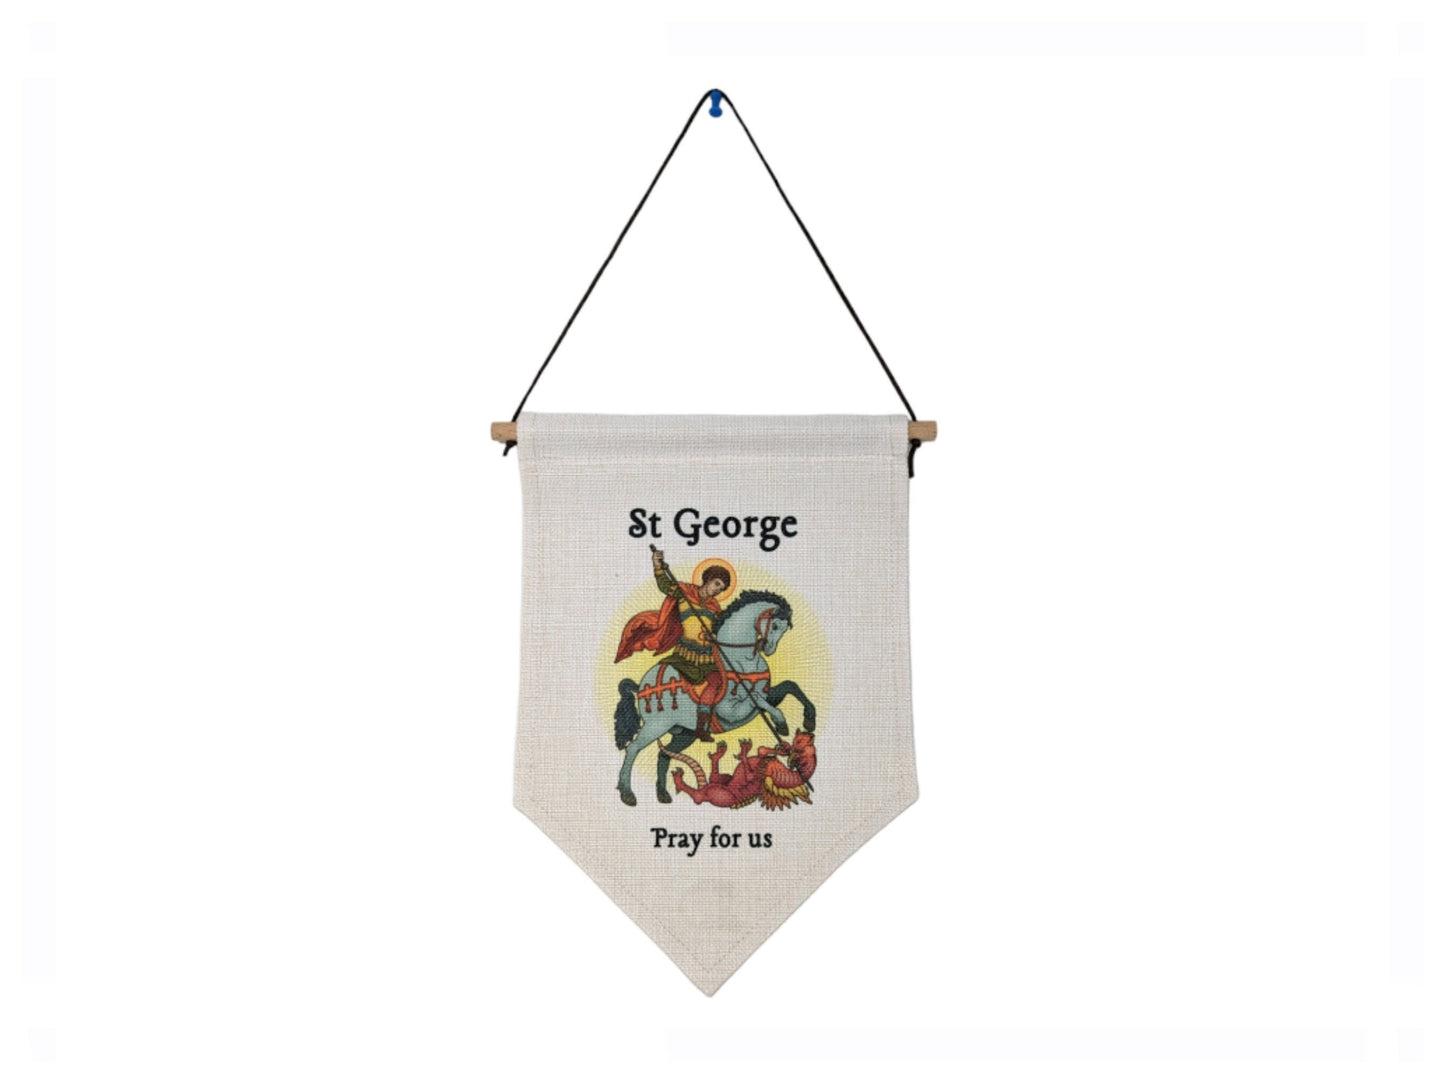 St George Pennant, Mini Banner, Catholic Religious Sacramental, Devotional, Pilgrimage, Patron Saint of England, St. George and the dragon